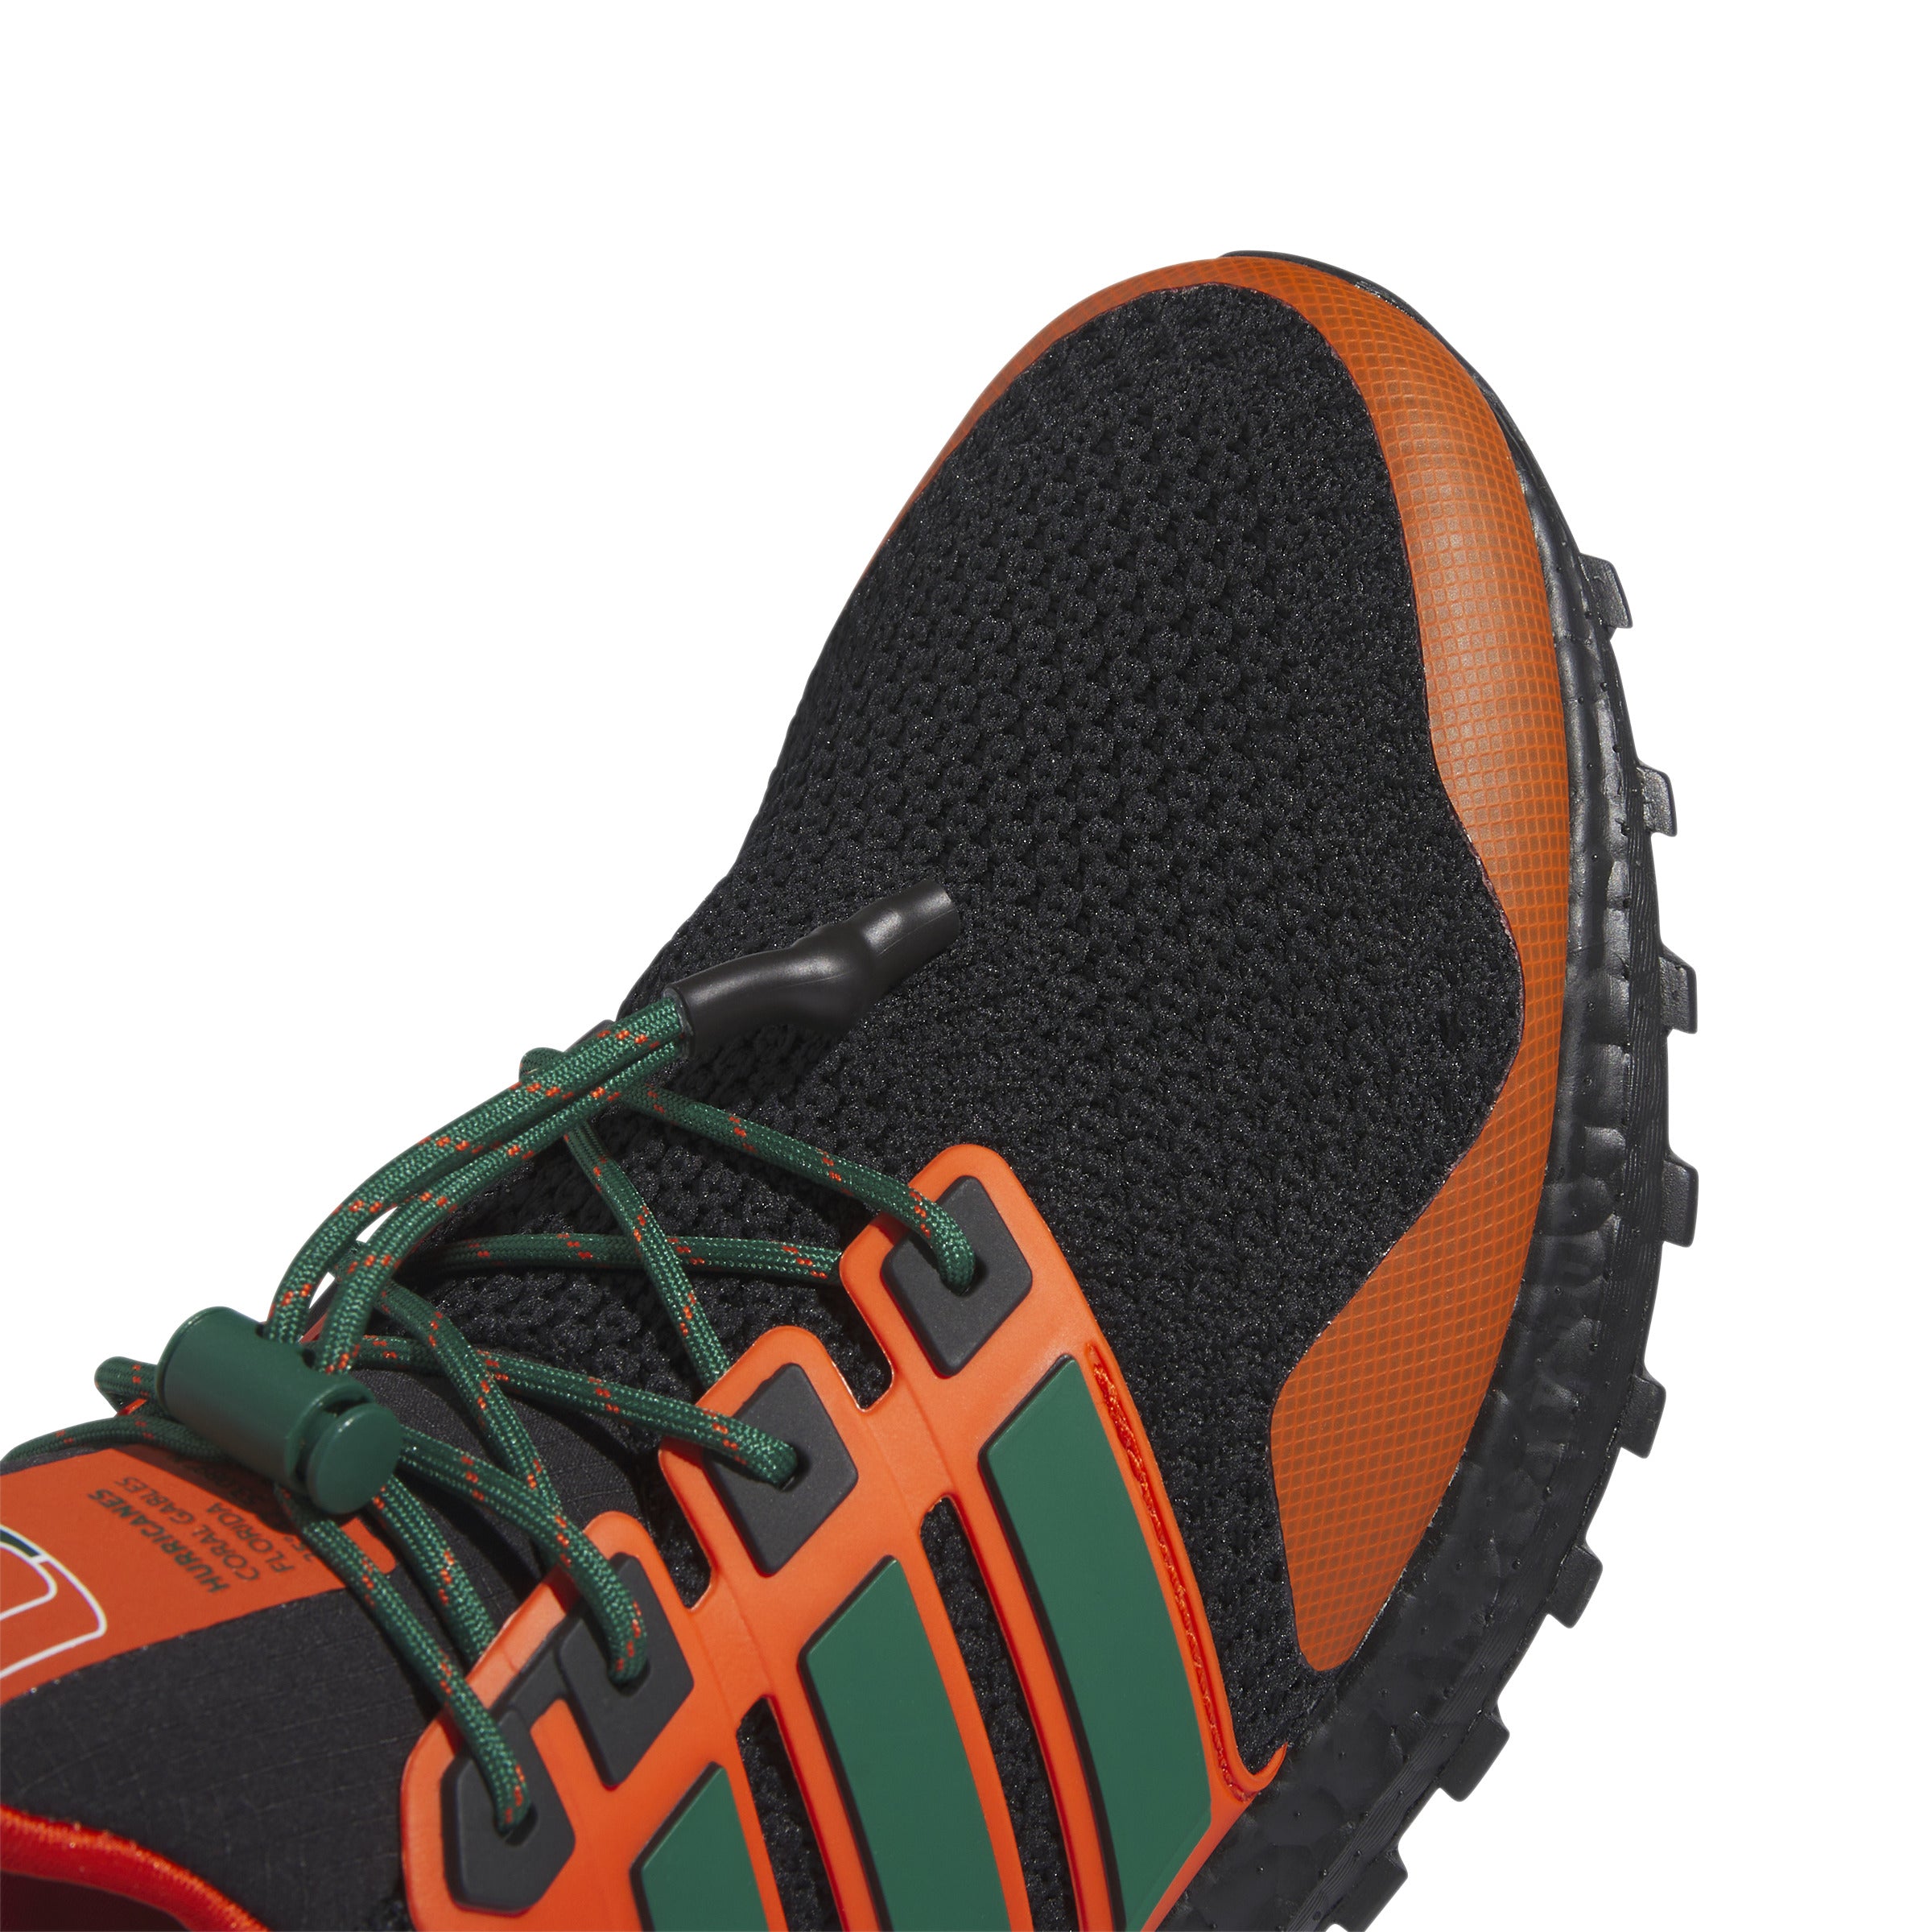 2023 Miami Hurricanes adidas Ultraboost 1.0  Shoes  /  Sneakers - Black/Orange